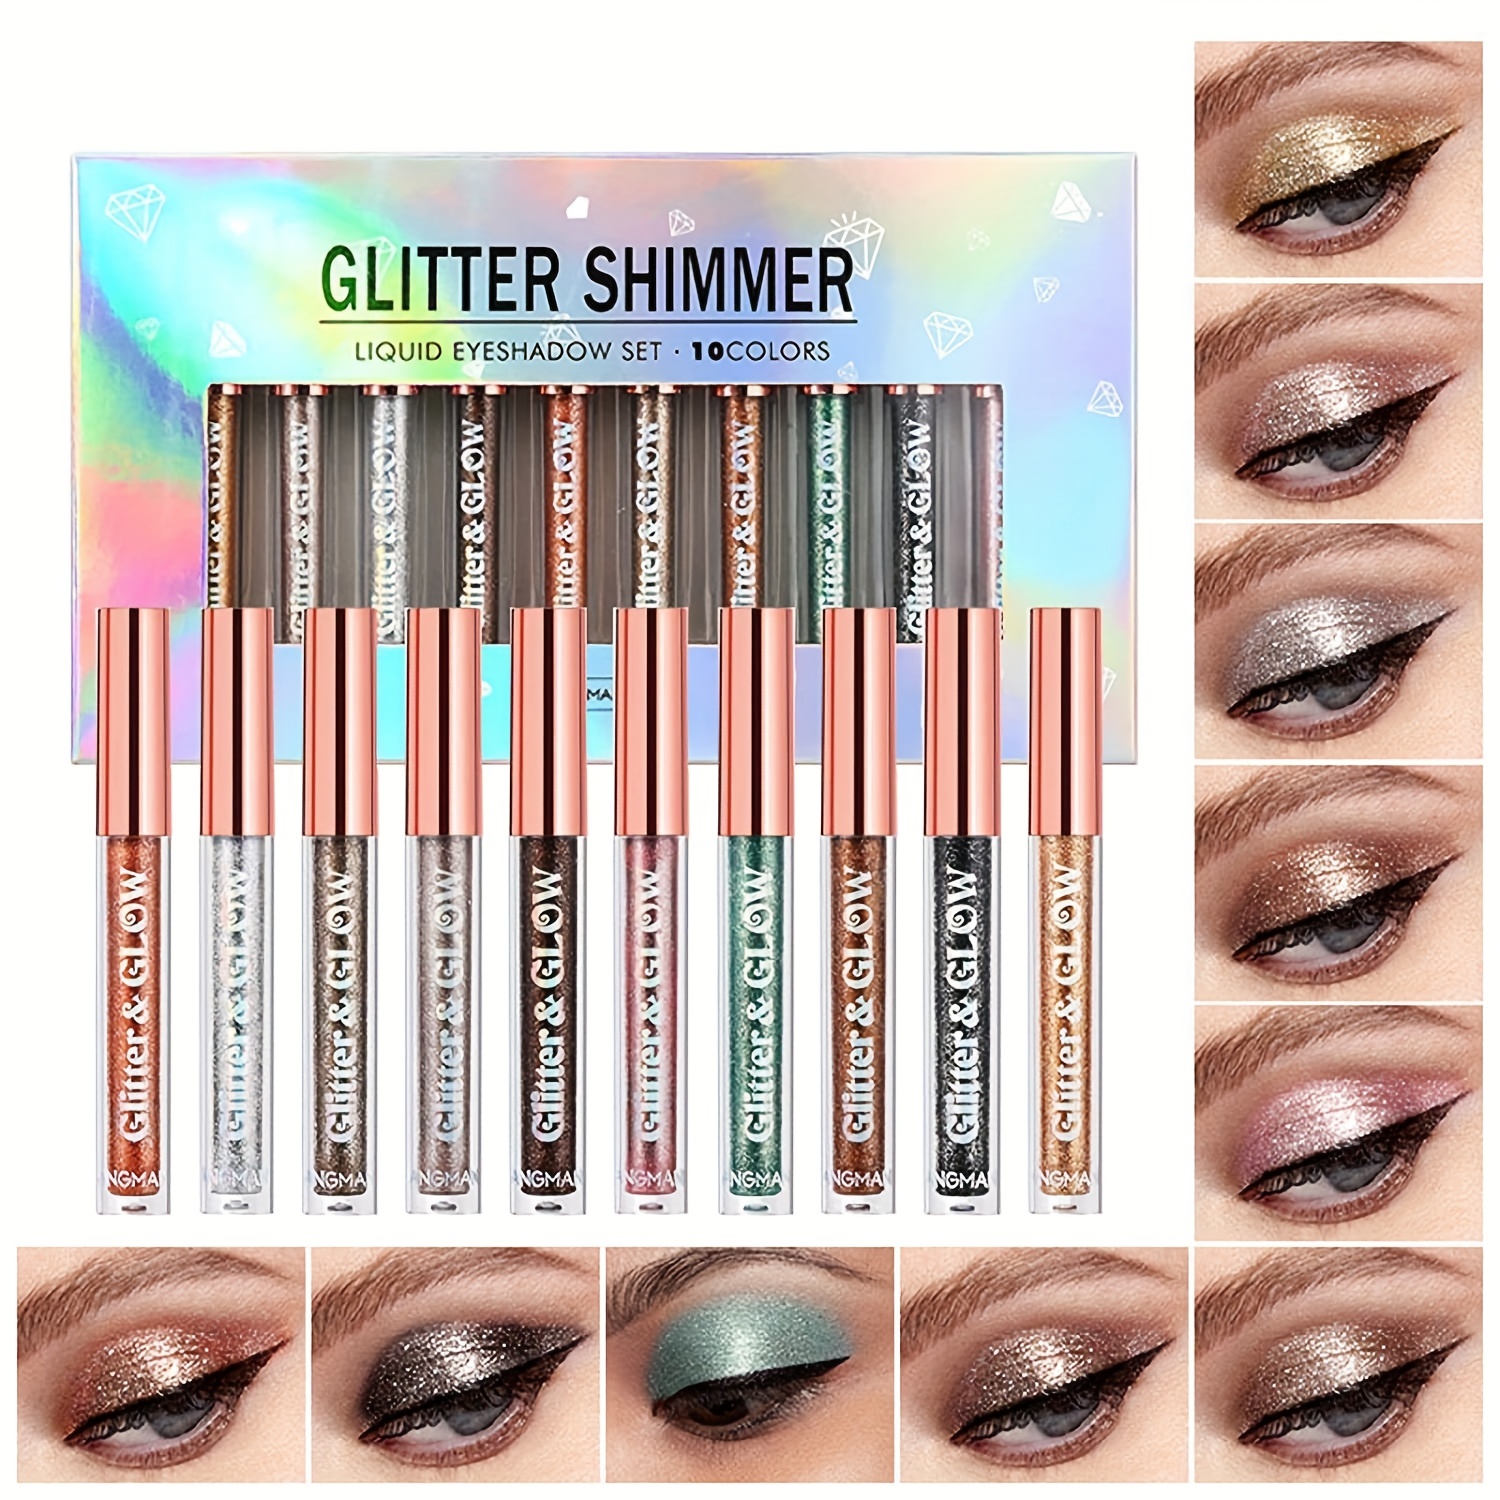 

10 Colors Sparkling Liquid Glitter Eyeshadow Set - Metallic Shimmer, Waterproof, Long-lasting, Fast-drying Smokey Eye Looks